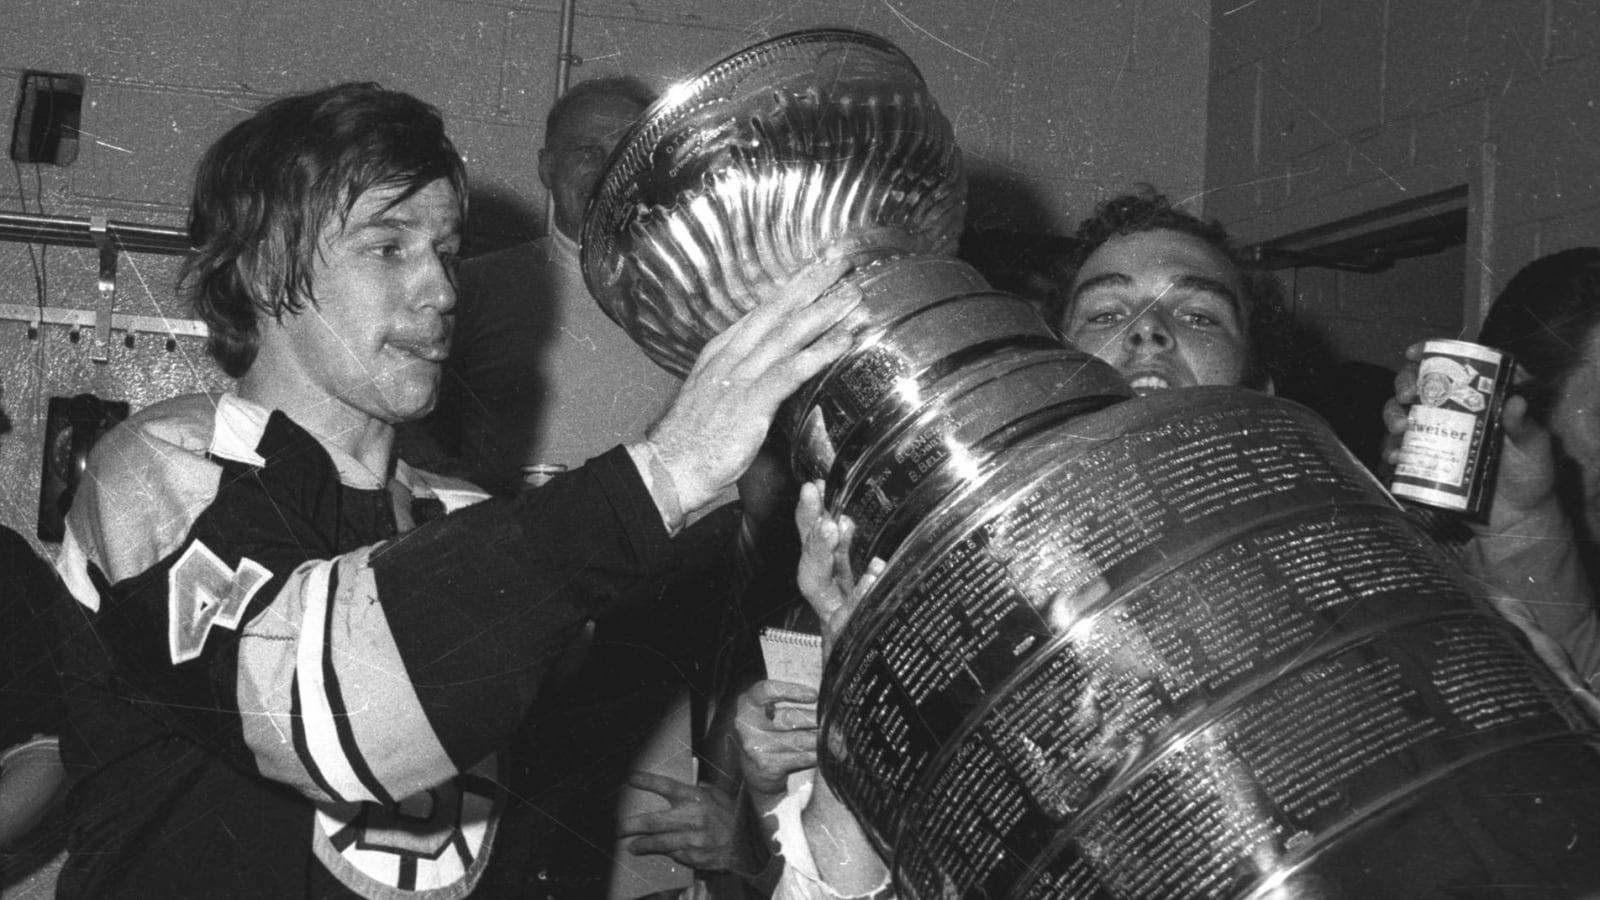 The '1971-72 Boston Bruins' quiz